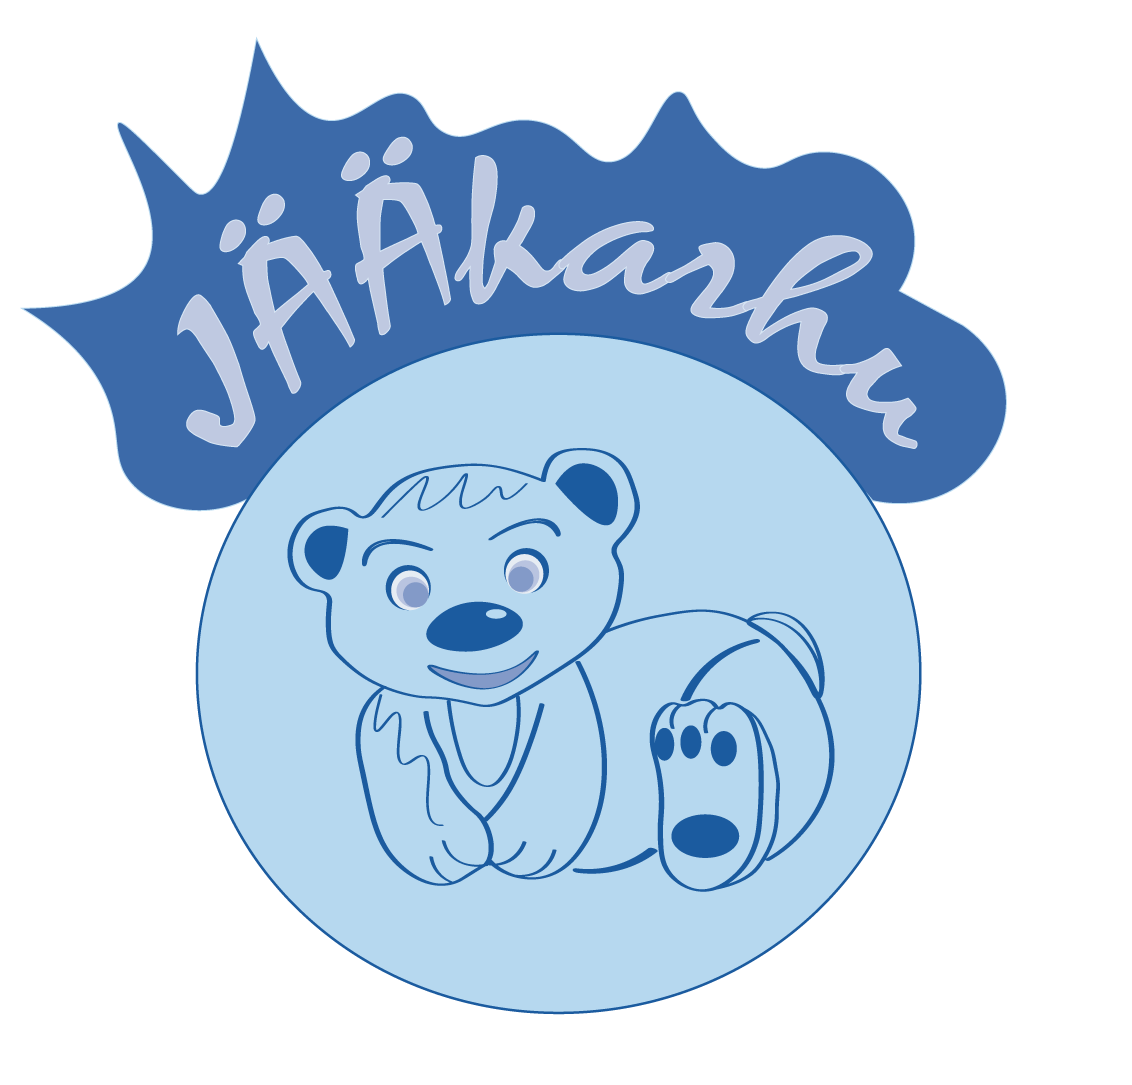 original JÄÄkarhu logo